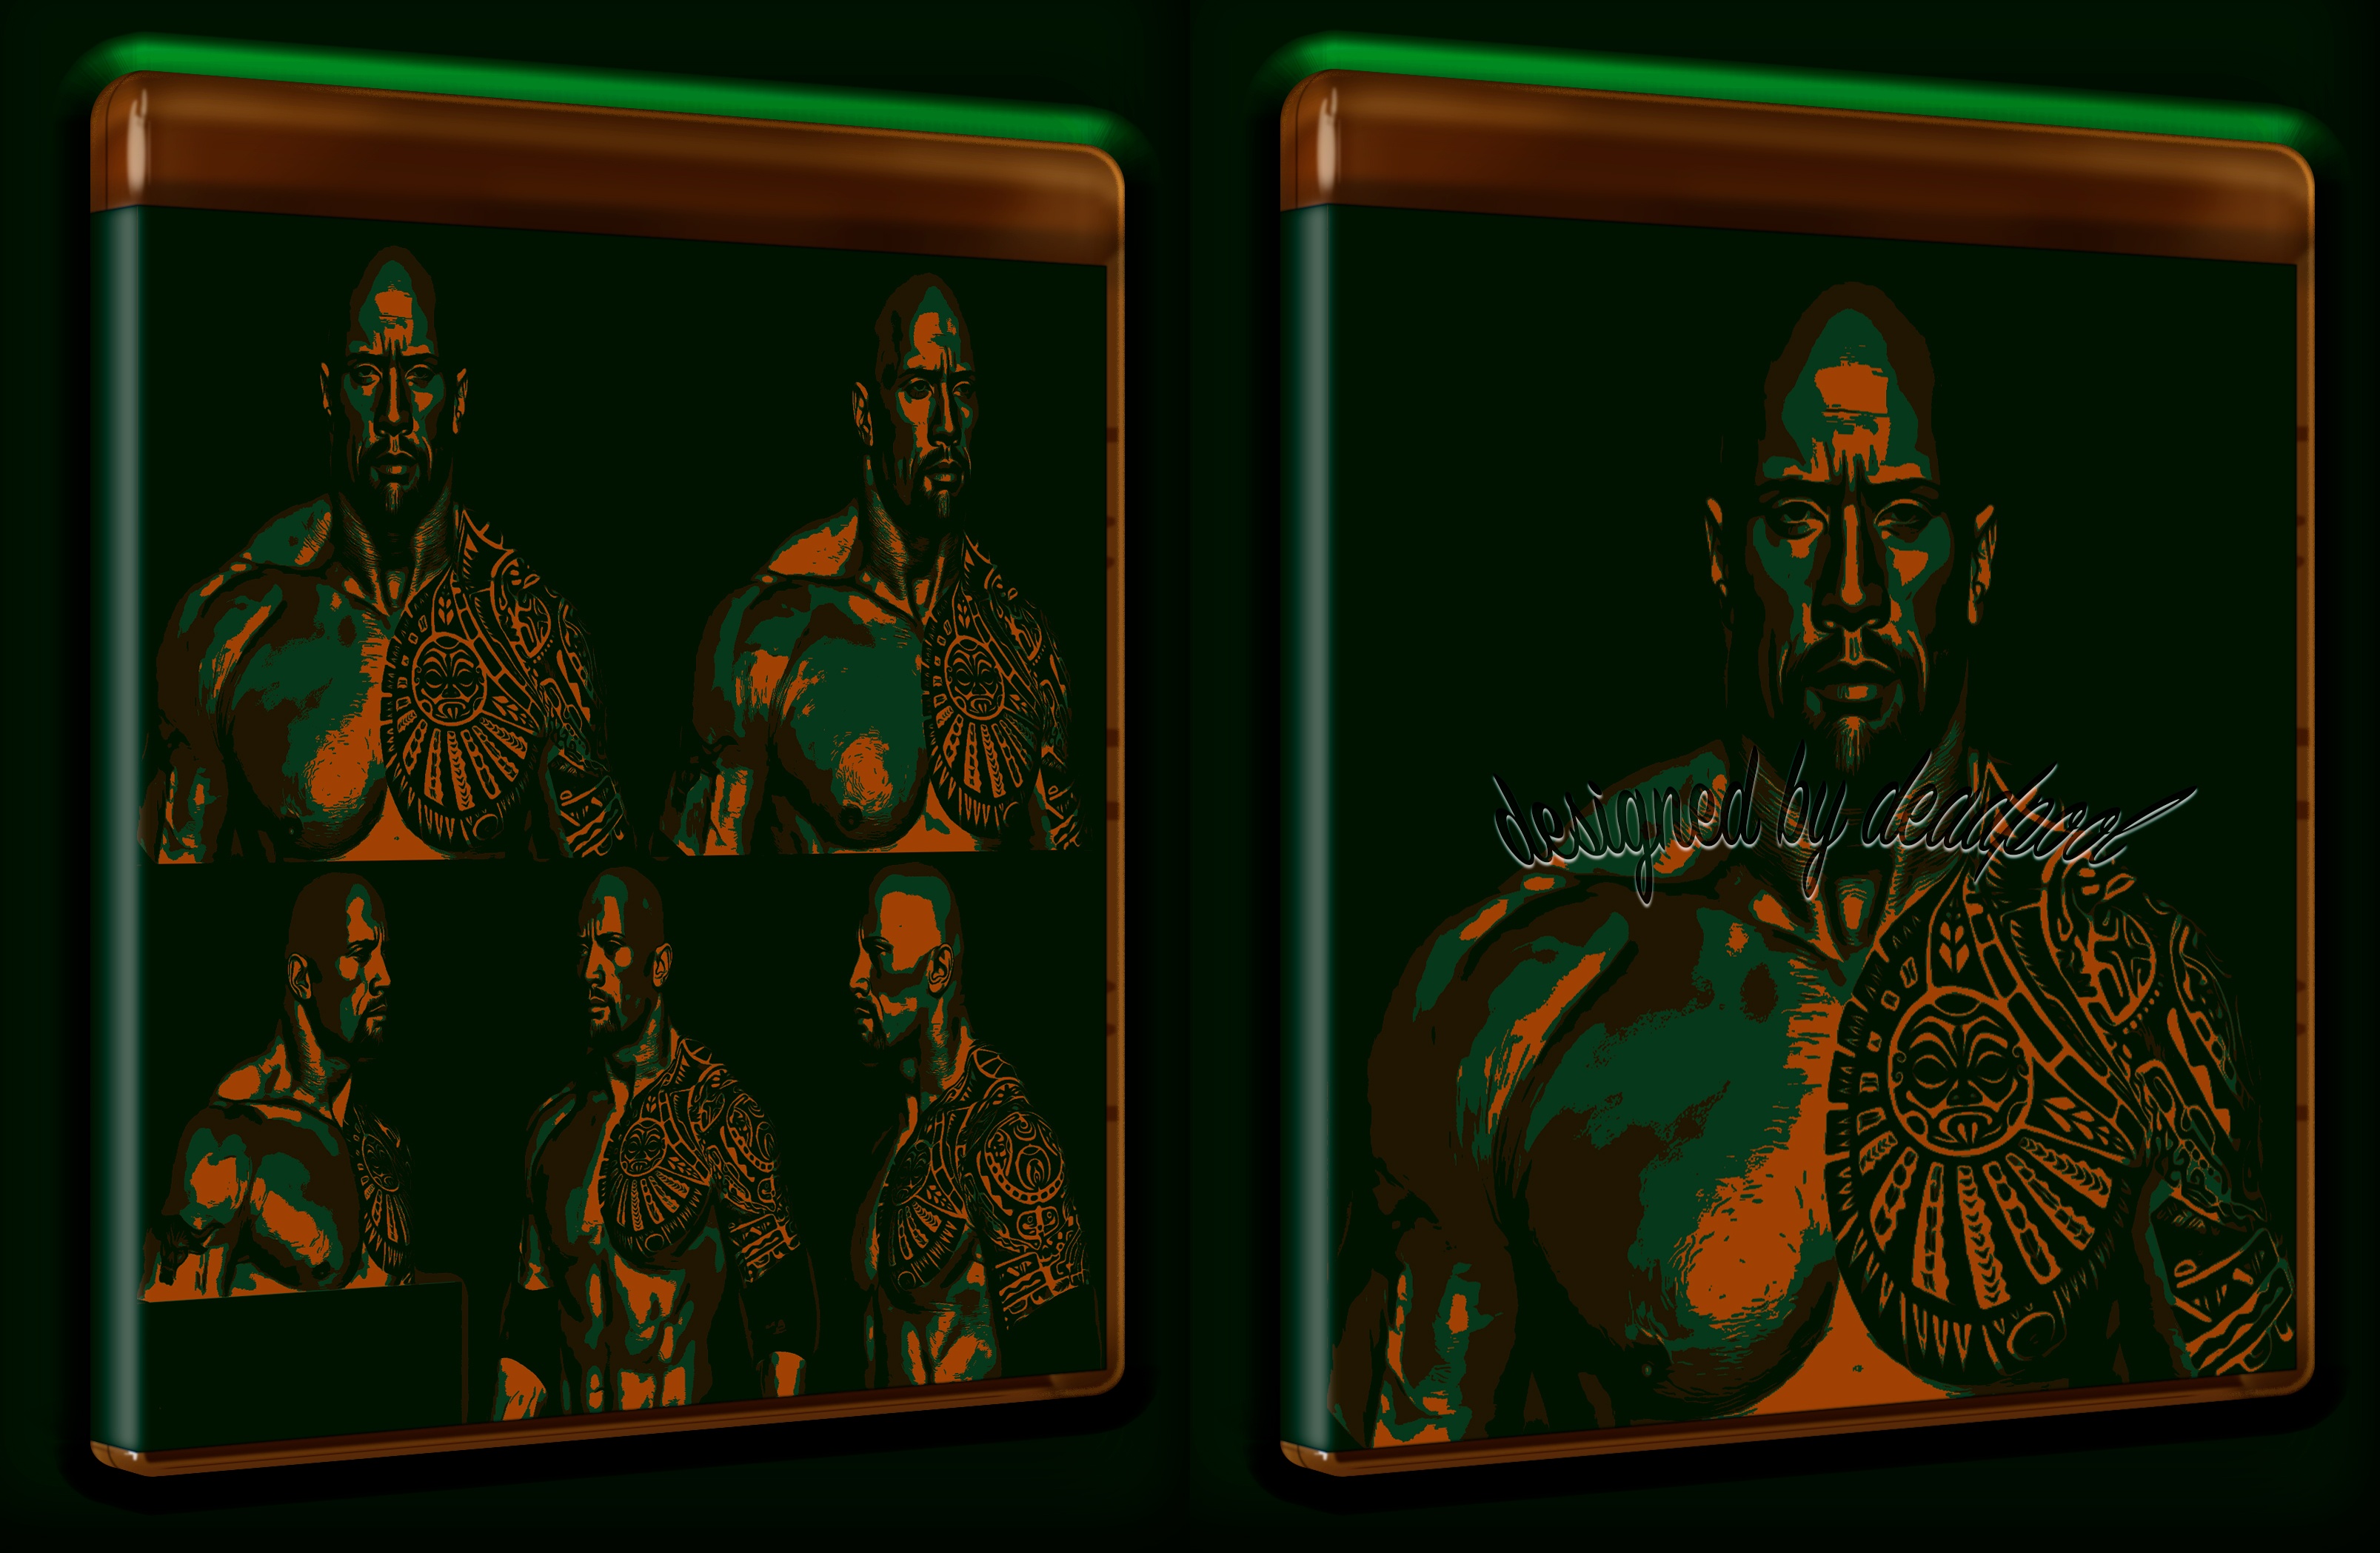 Wrestlemania 25: The Game box cover